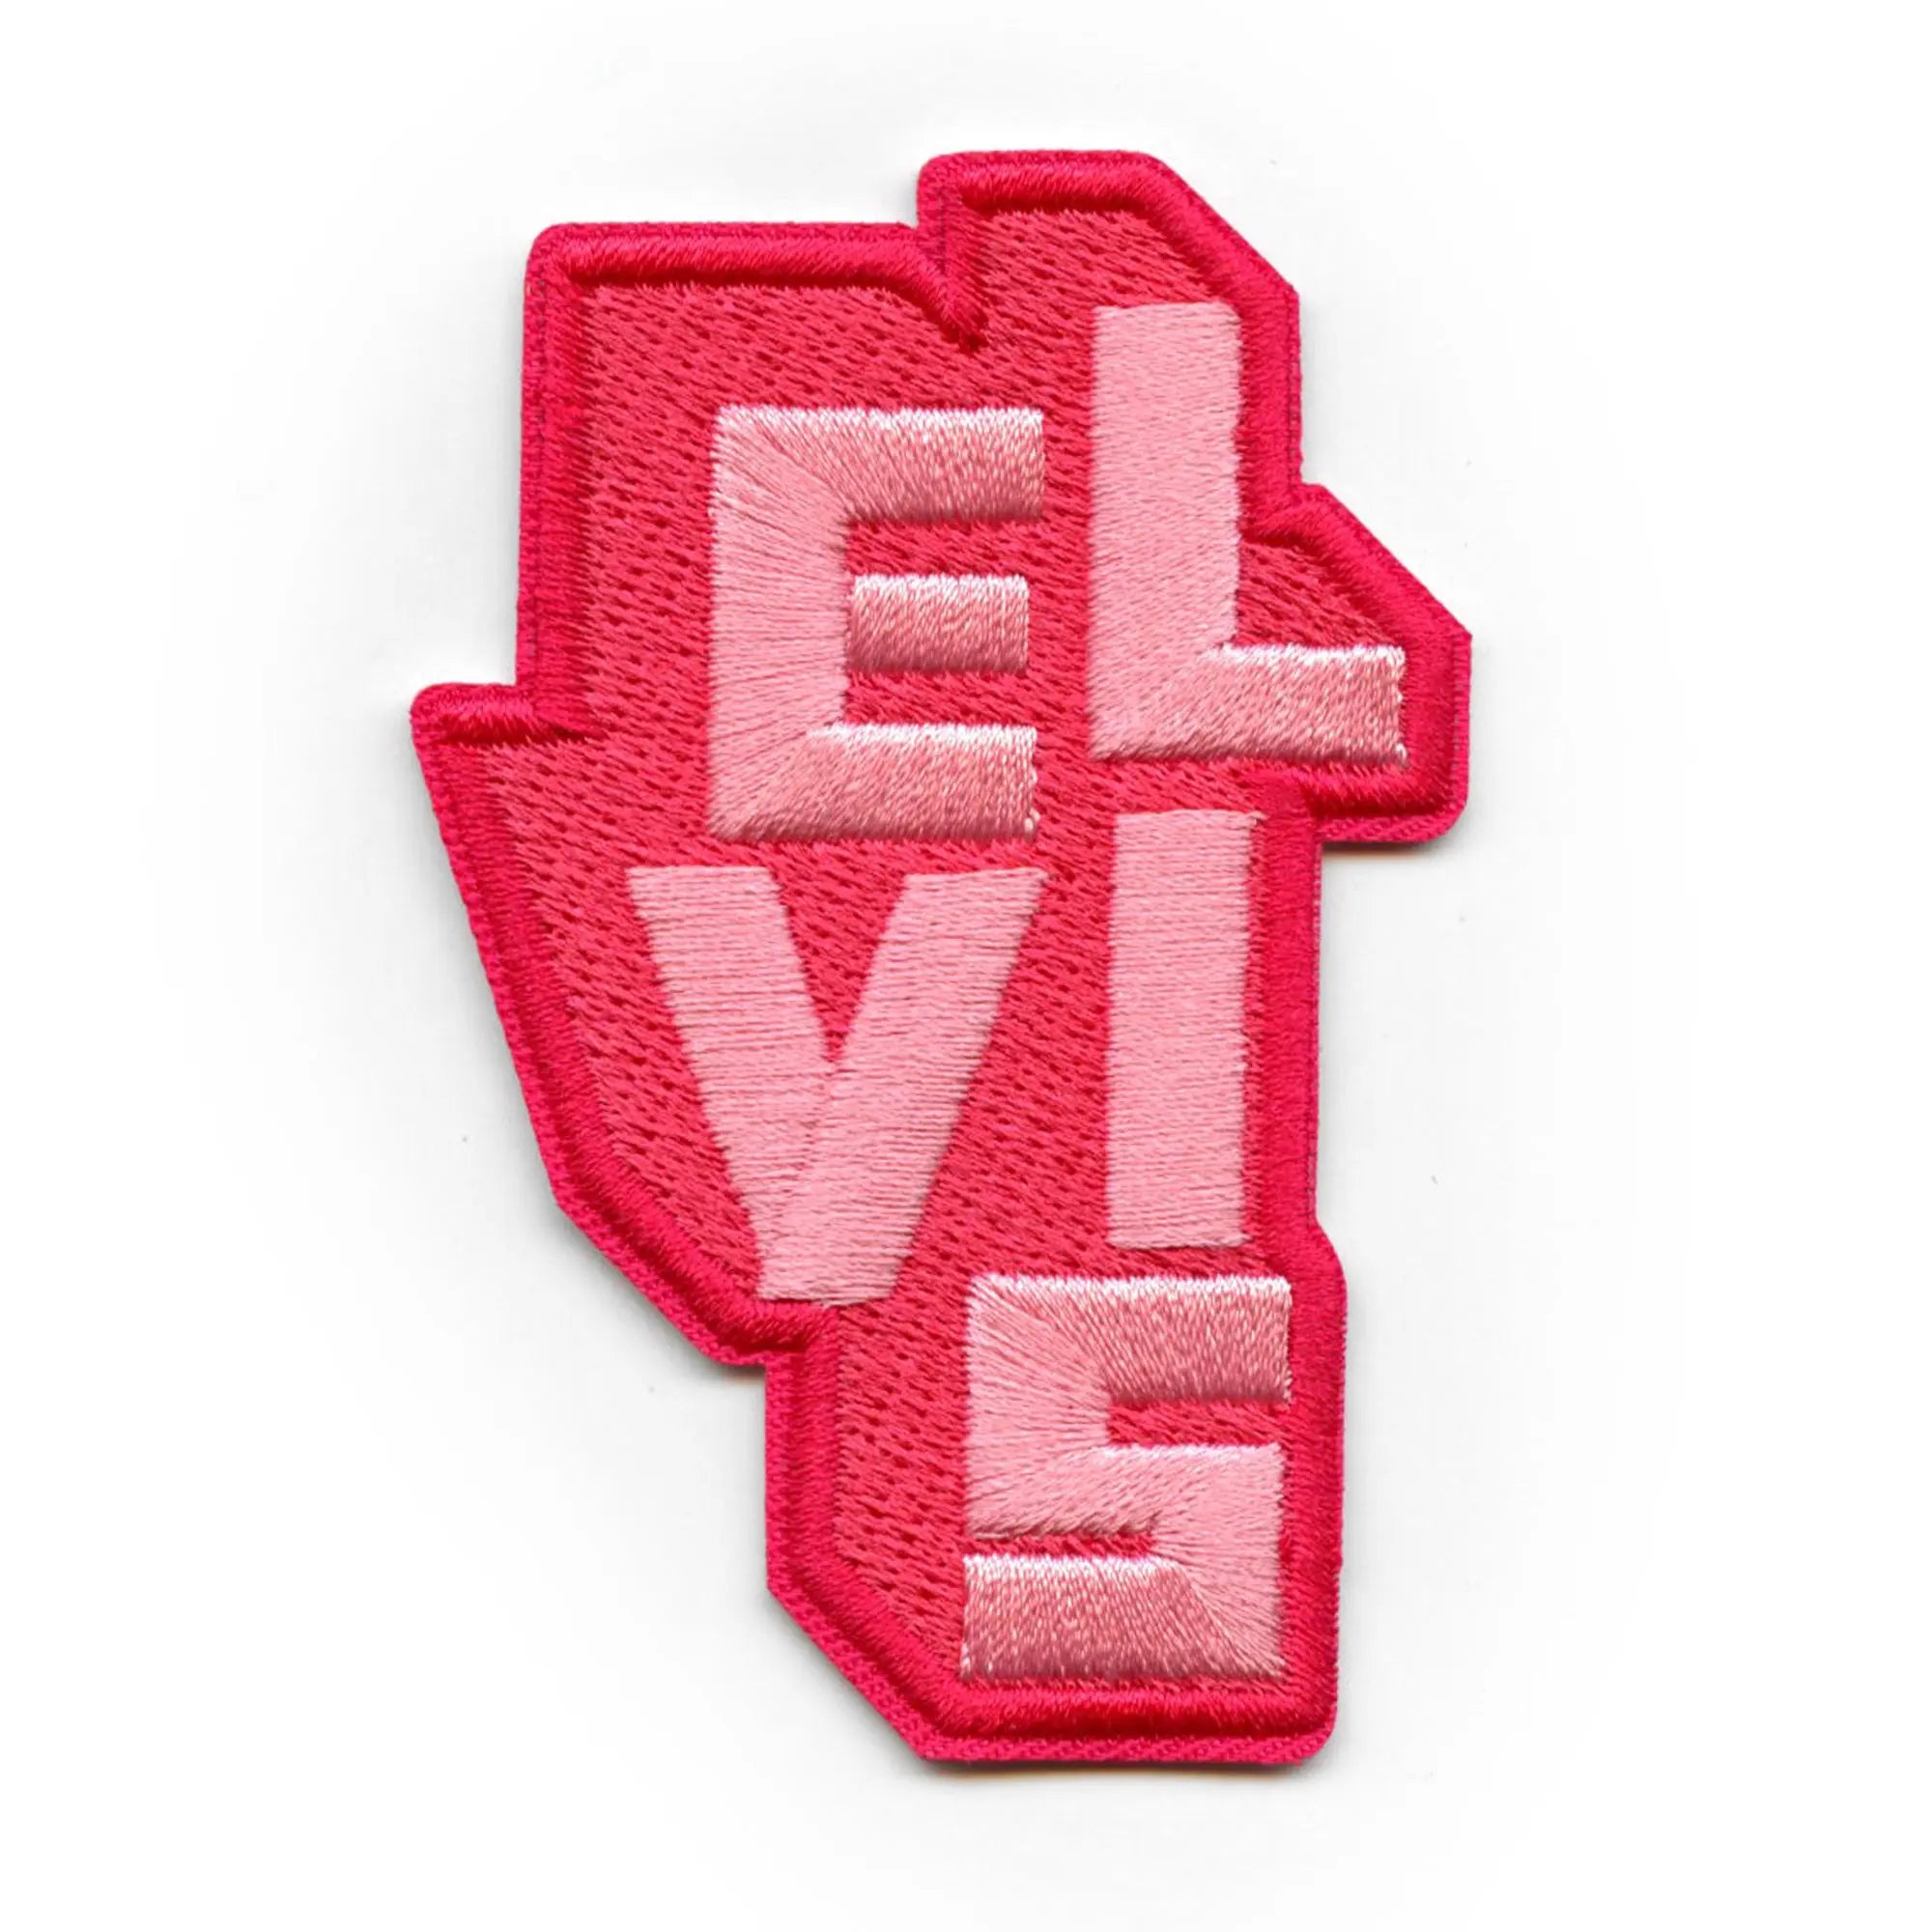 St. Louis Cardinals Elvis Presley Baseball Jersey -   Worldwide Shipping